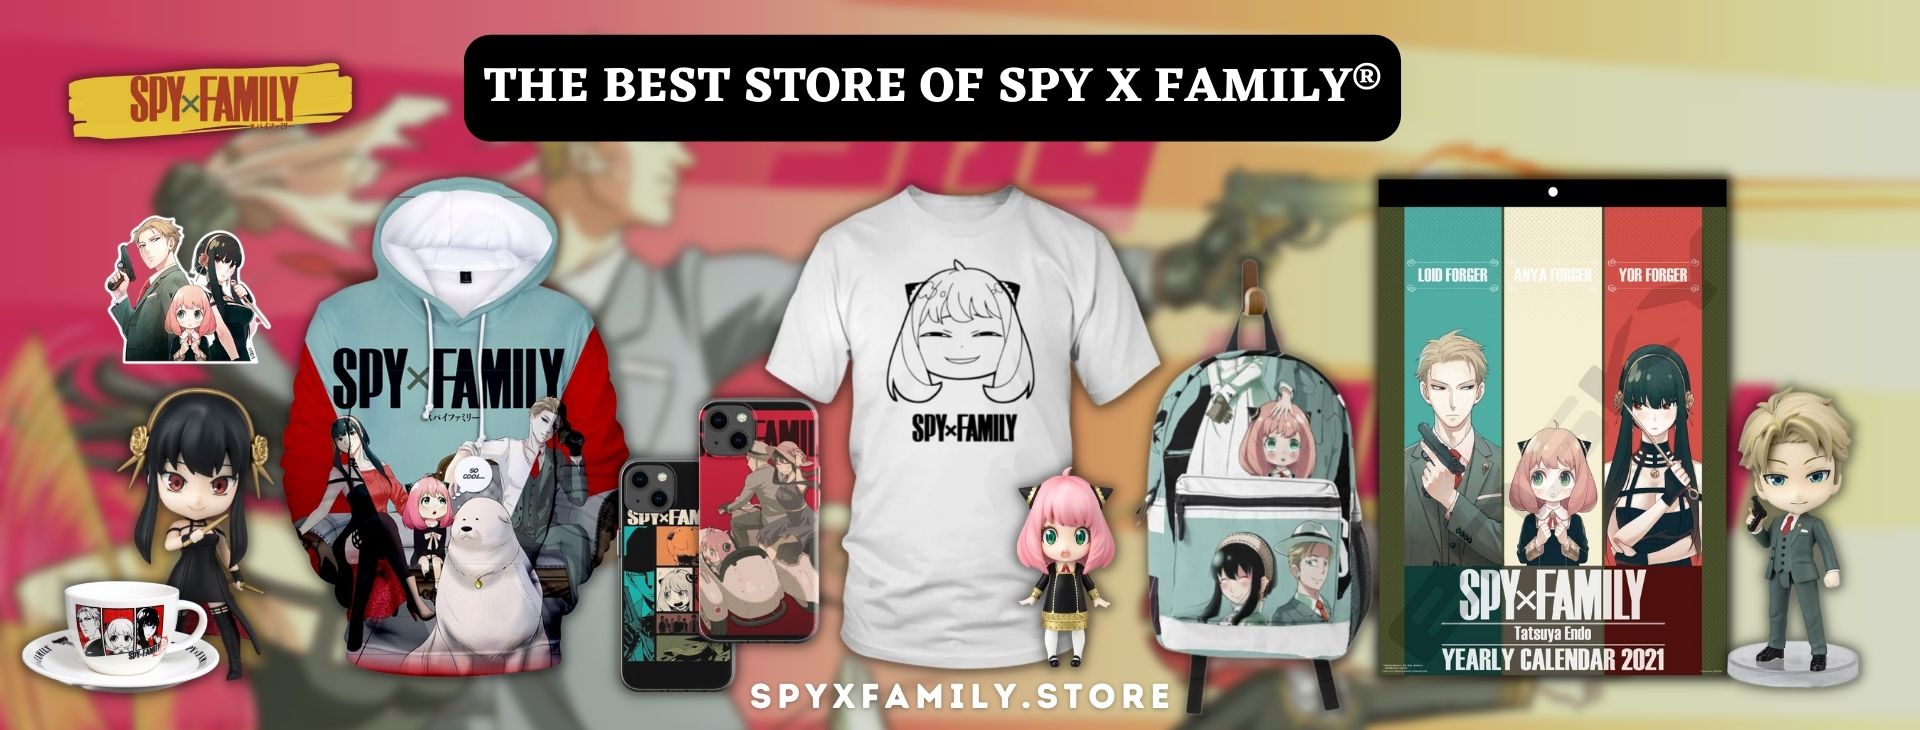 Spy x Family Banner - Spy x Family Merch